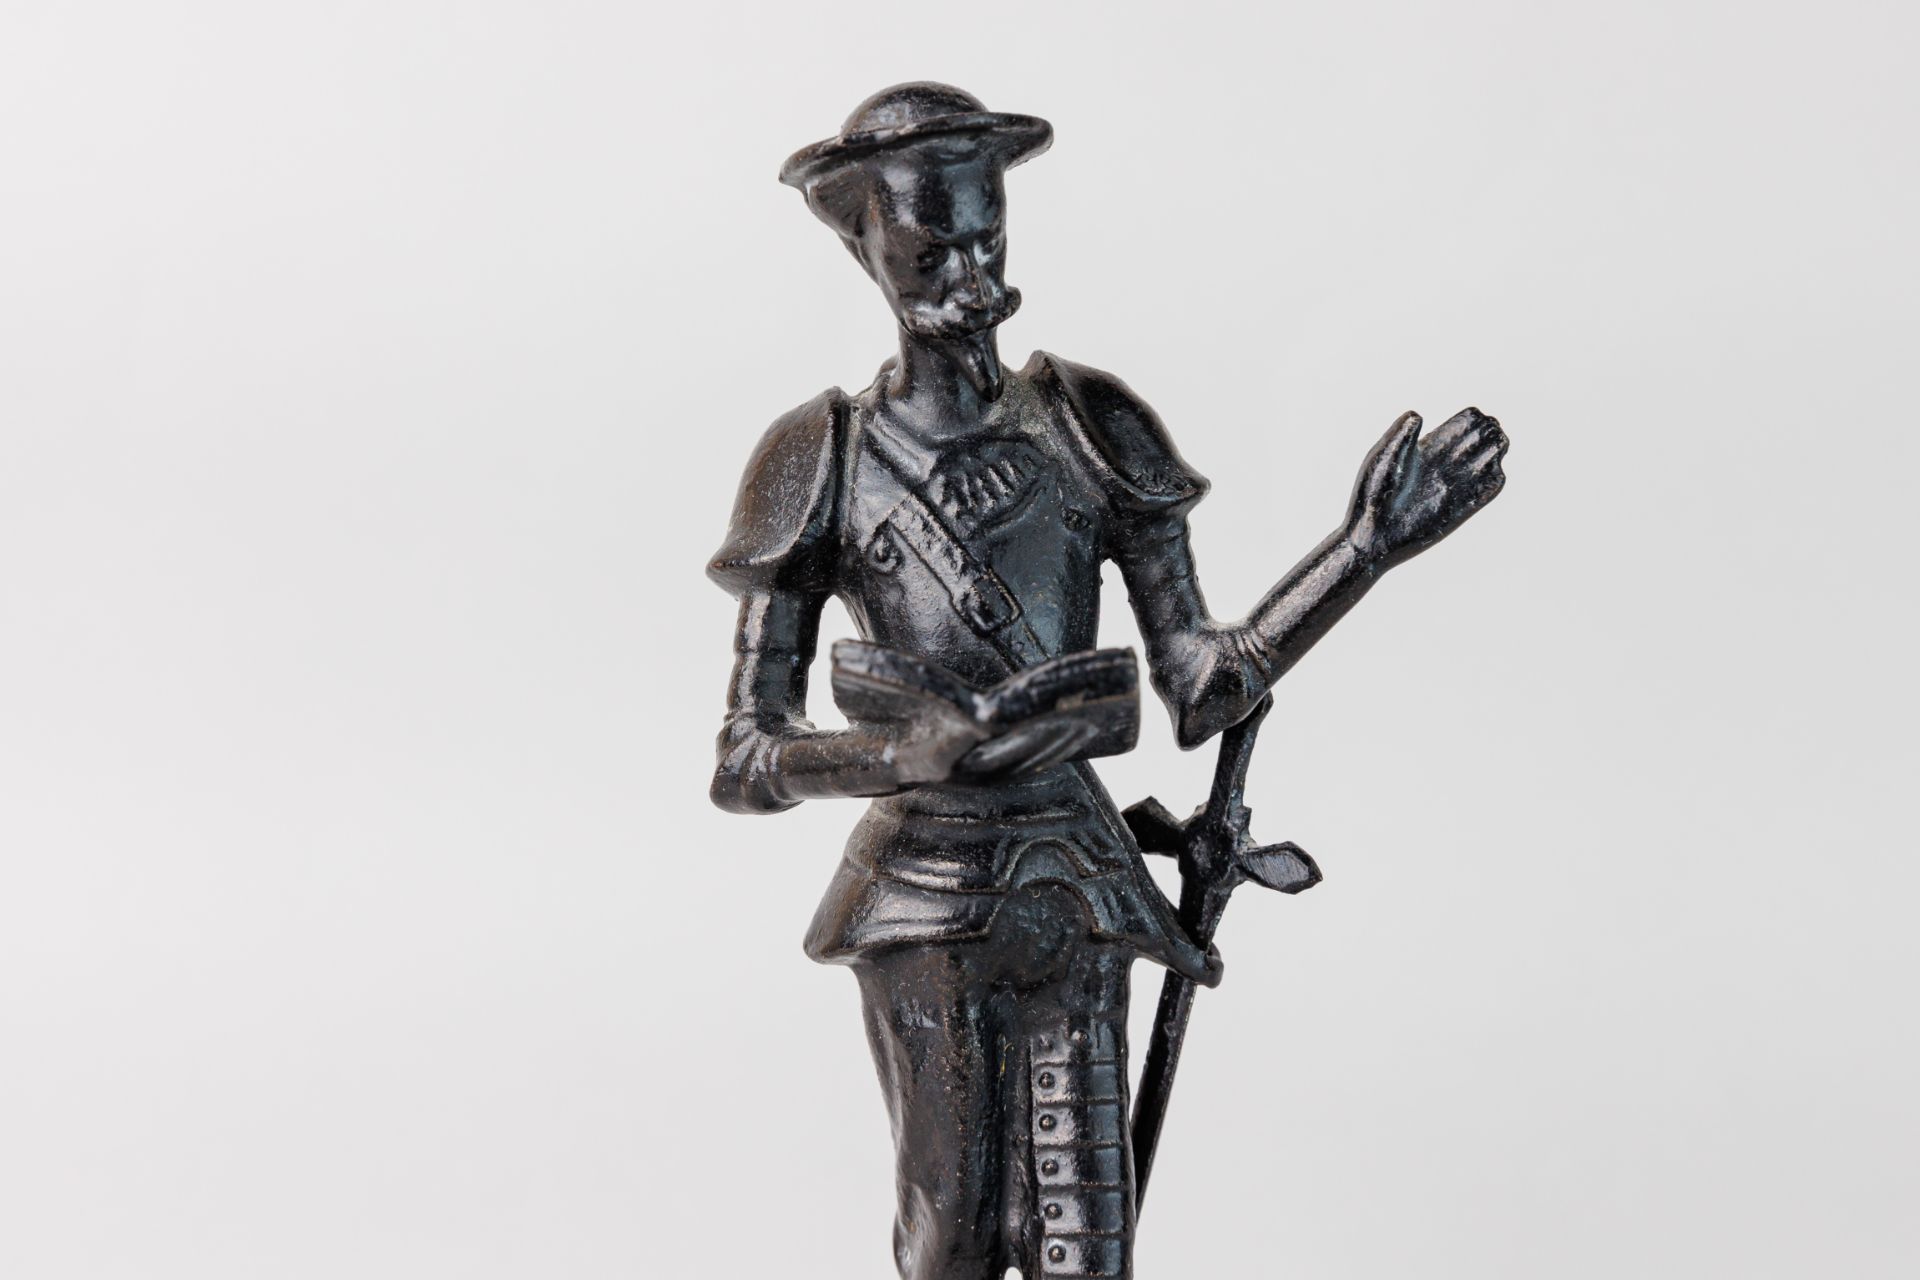 Figurine "Don Quixote" - Image 4 of 8